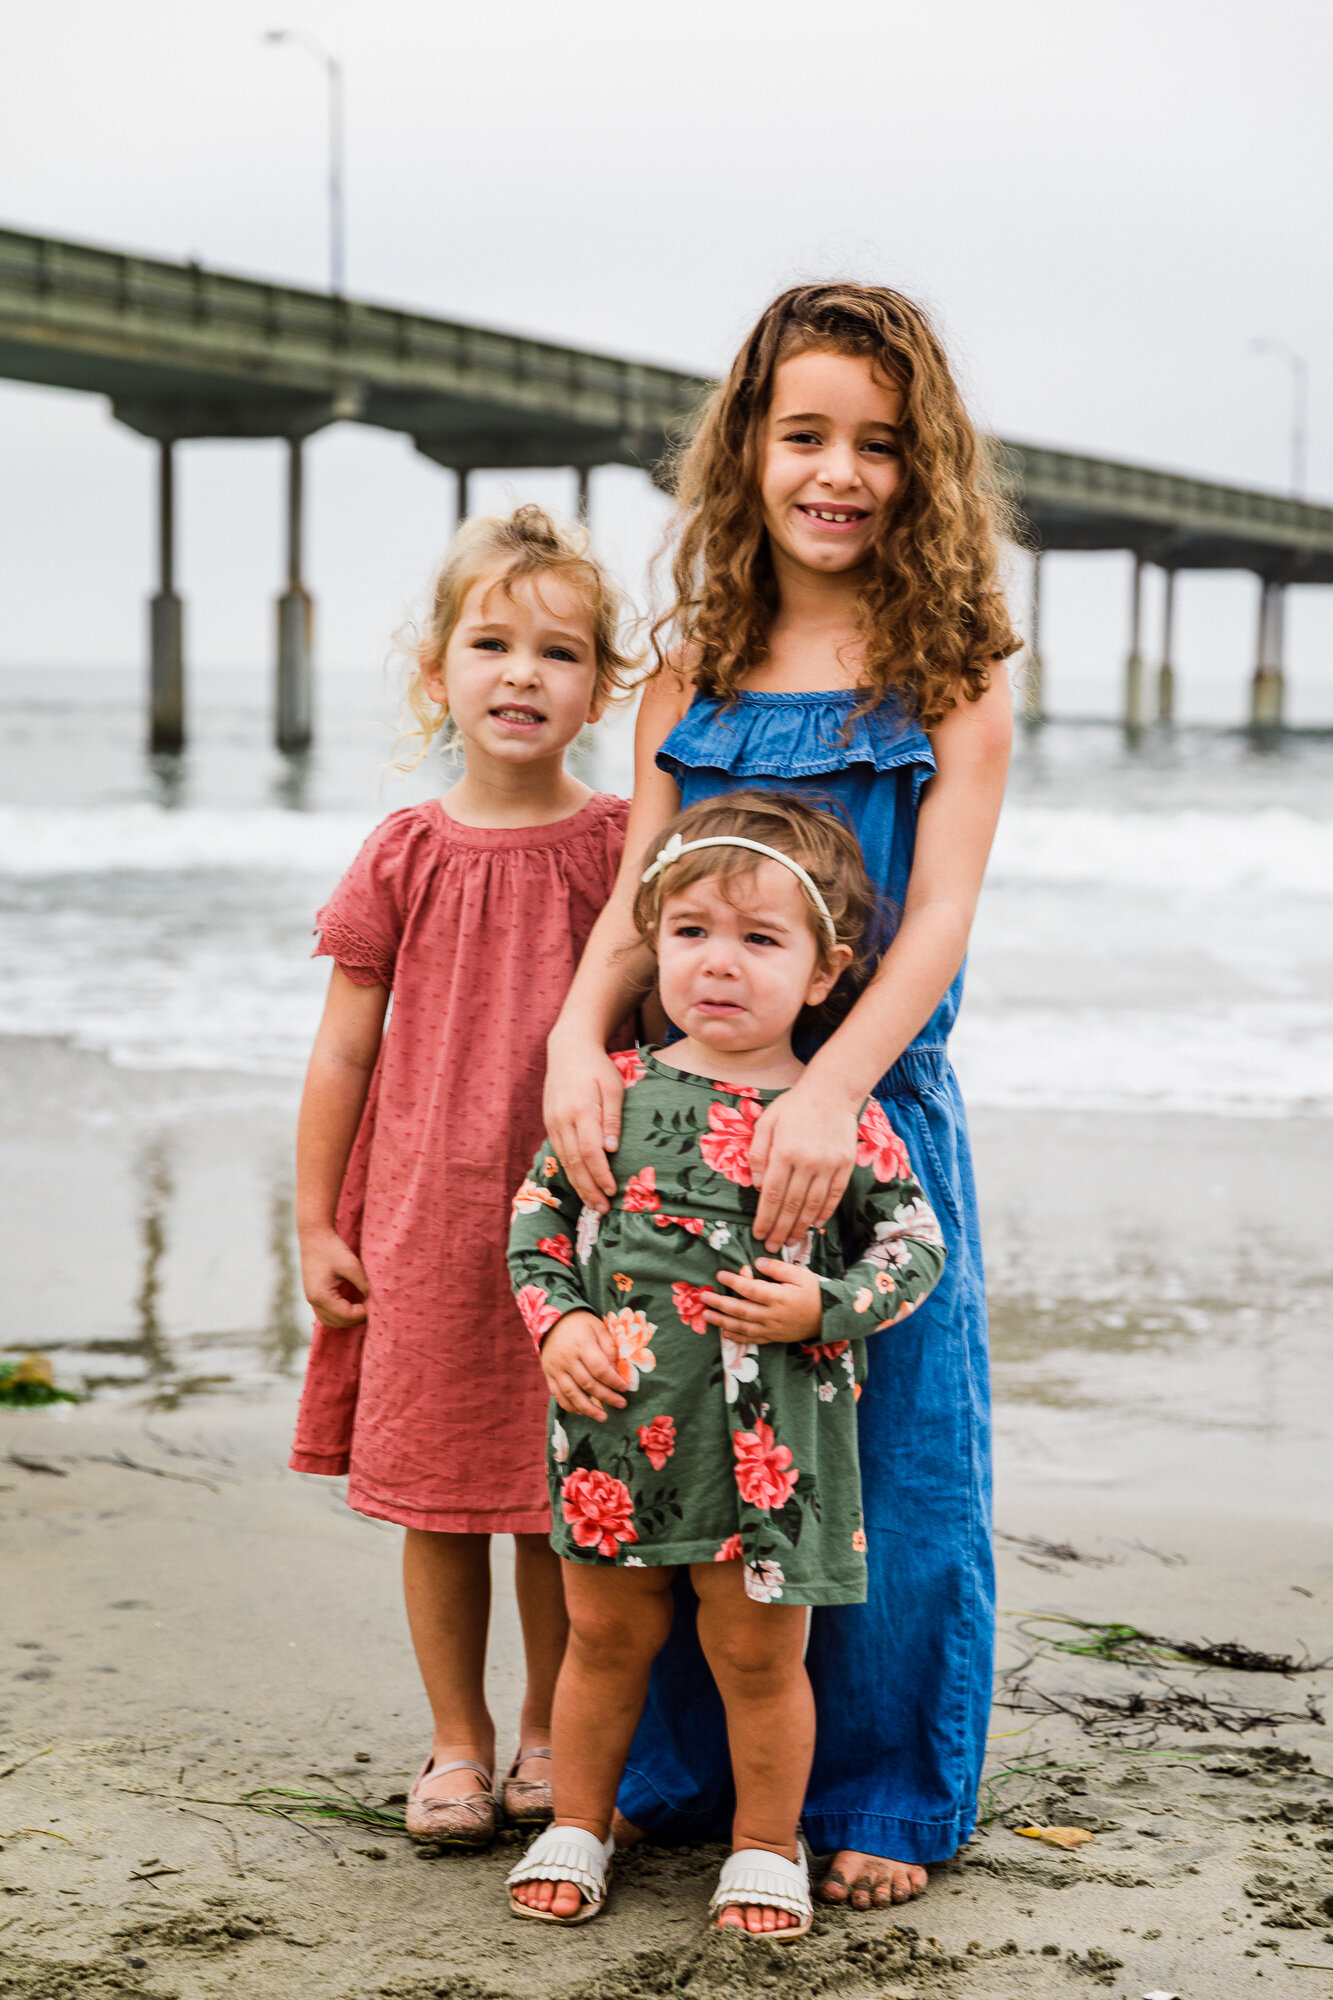 Family Portrait Photography Session at Ocean Beach Pier, San Diego, California-35.jpg